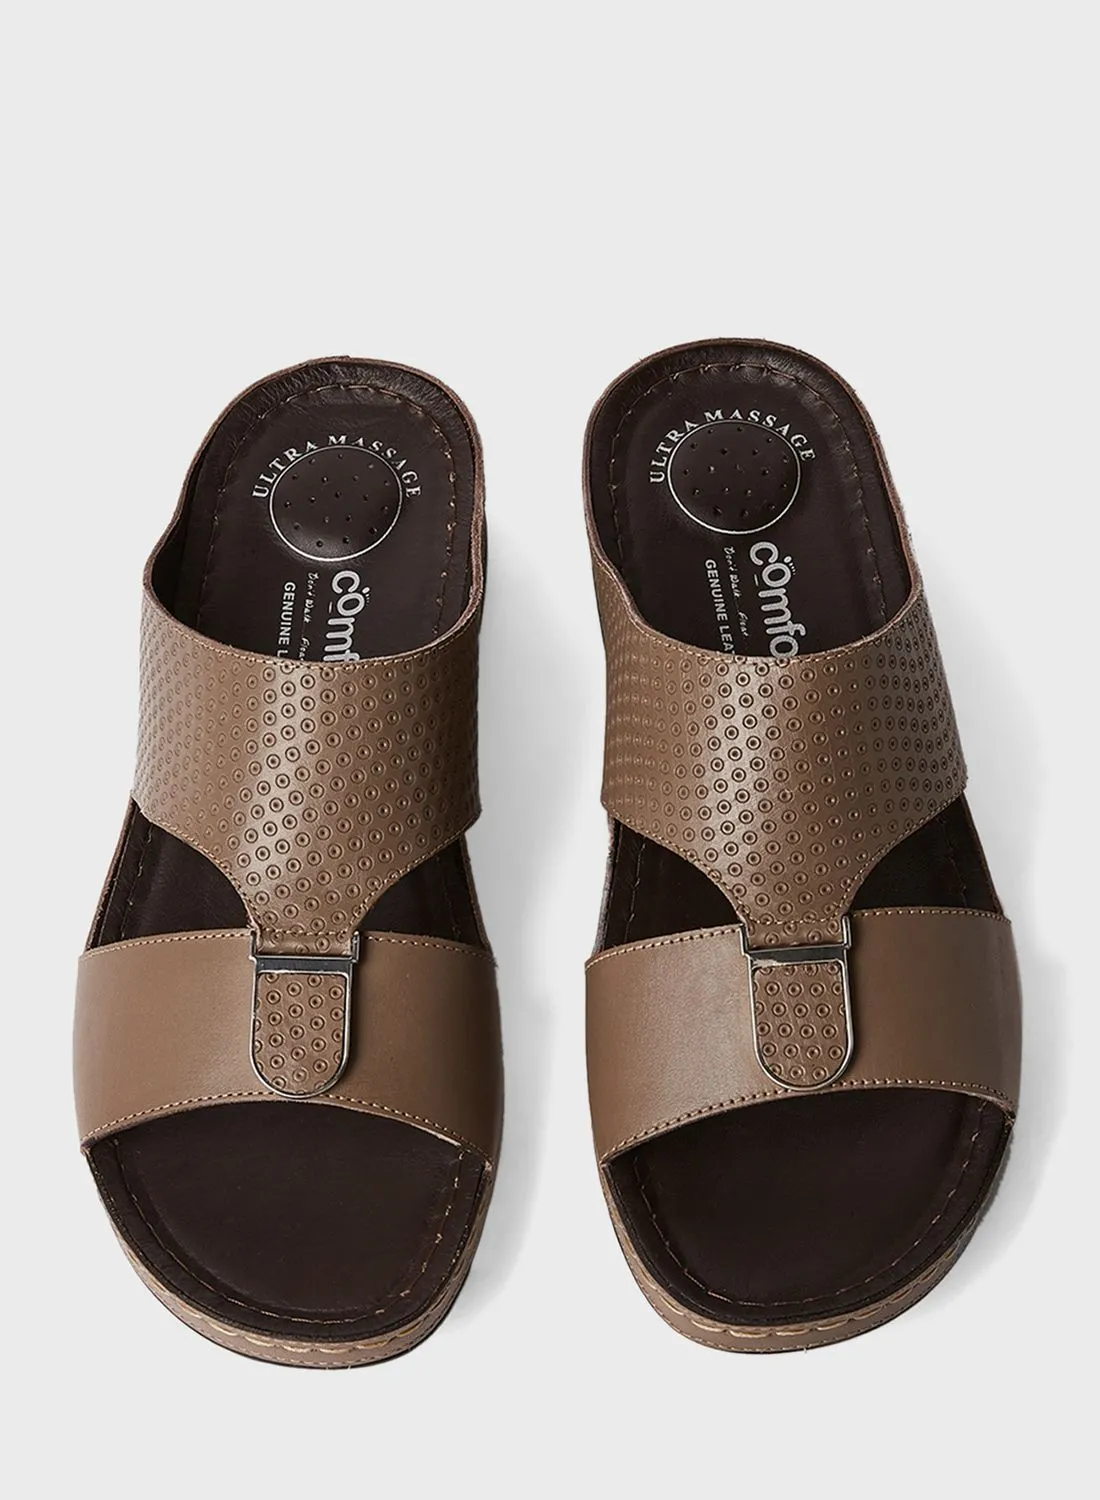 Comfort Plus Patterned Leather Sandals